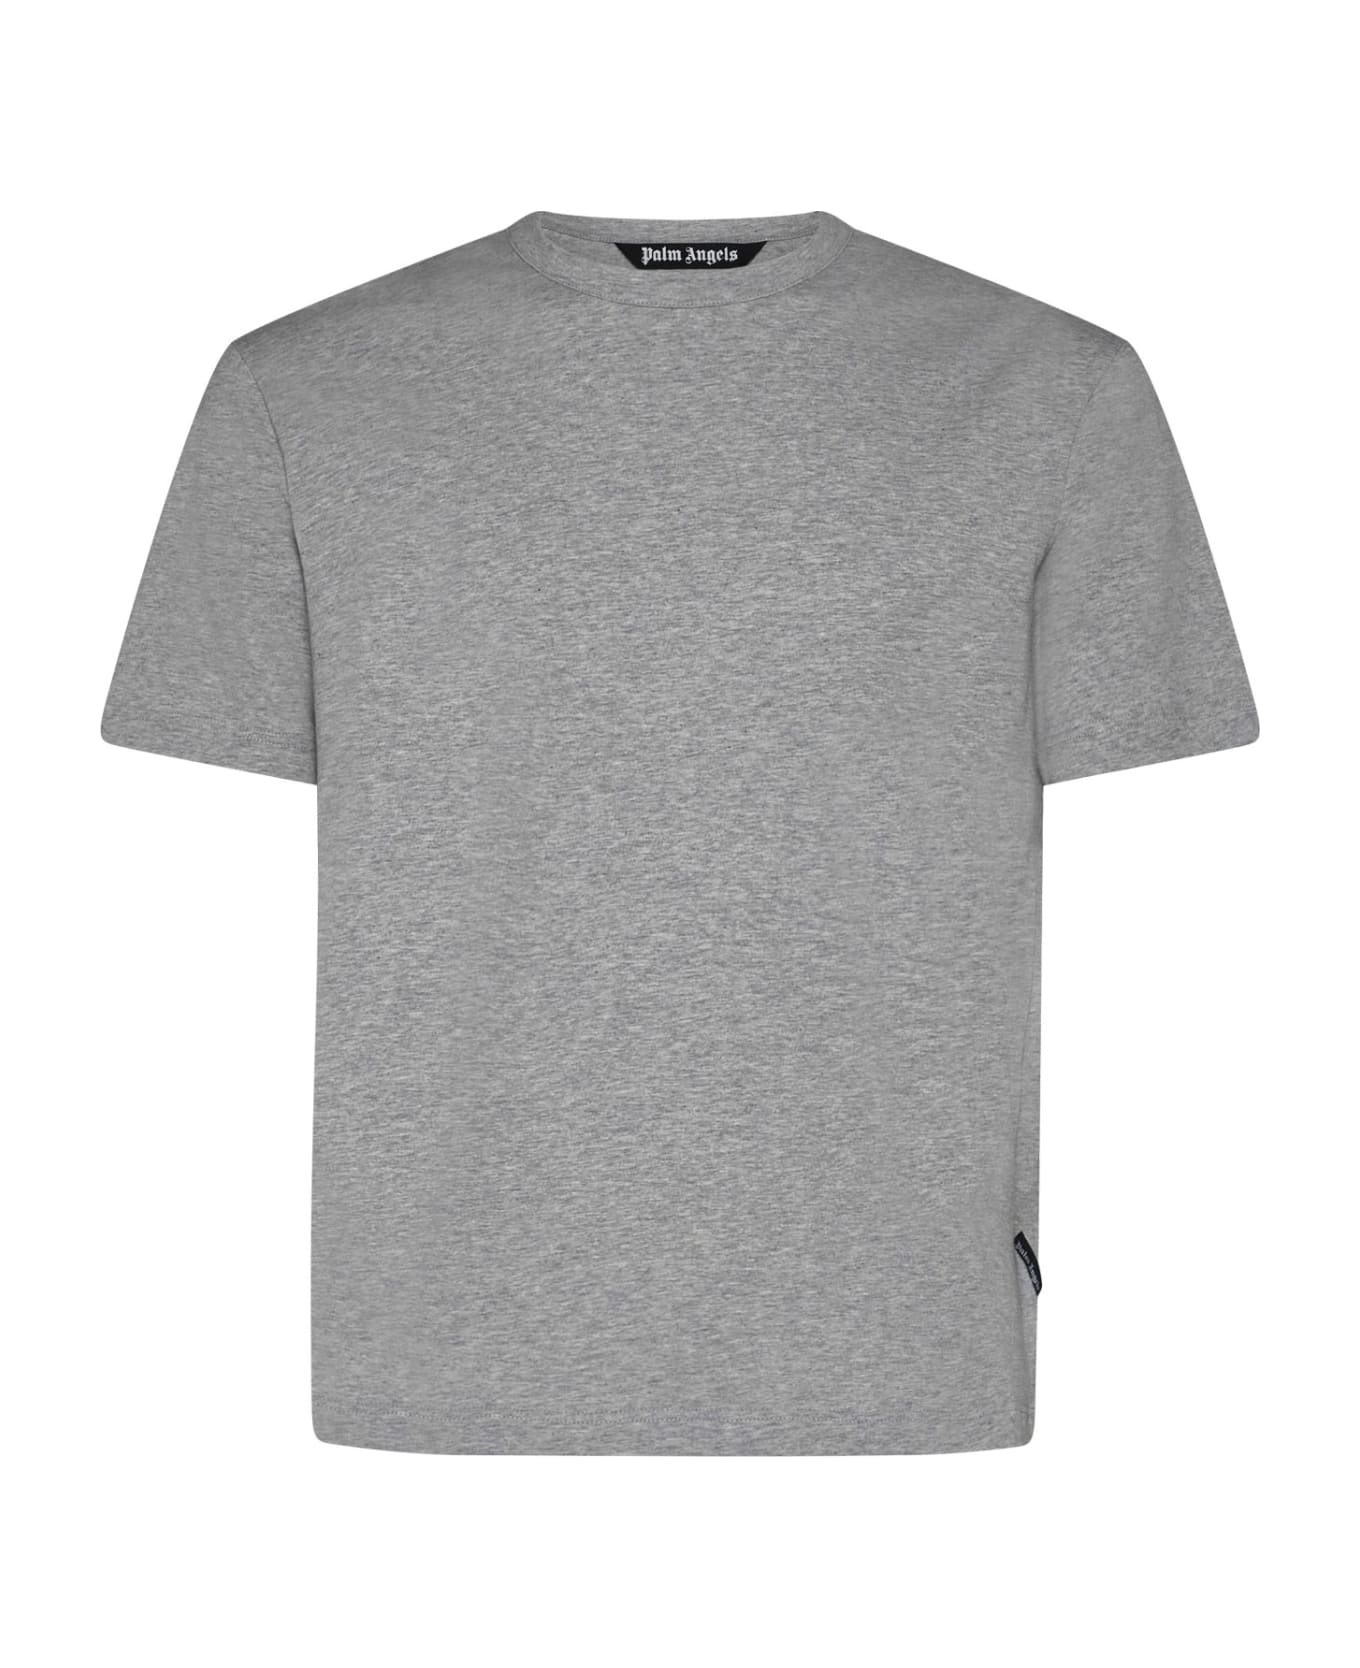 Palm Angels Round Neck T-shirt - Melange grey